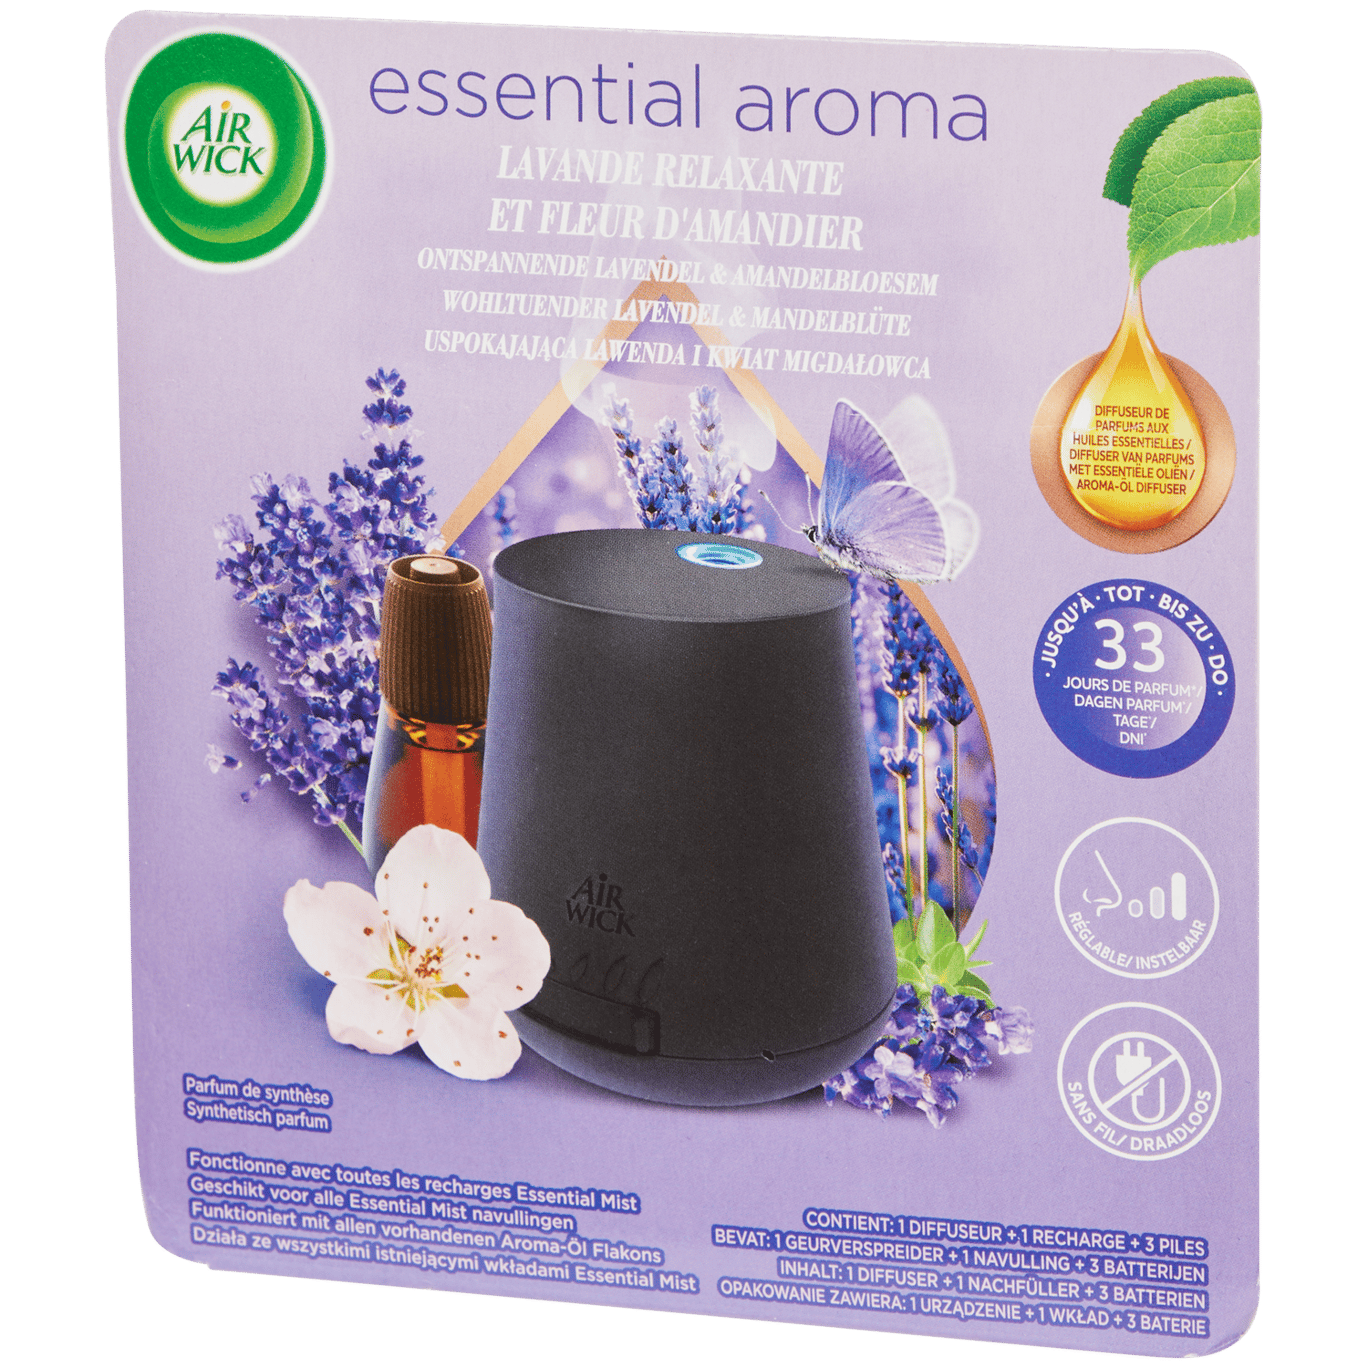 Air Wick Essential Aroma geurverspreider Ontspannende Lavendel & Amandelbloesem